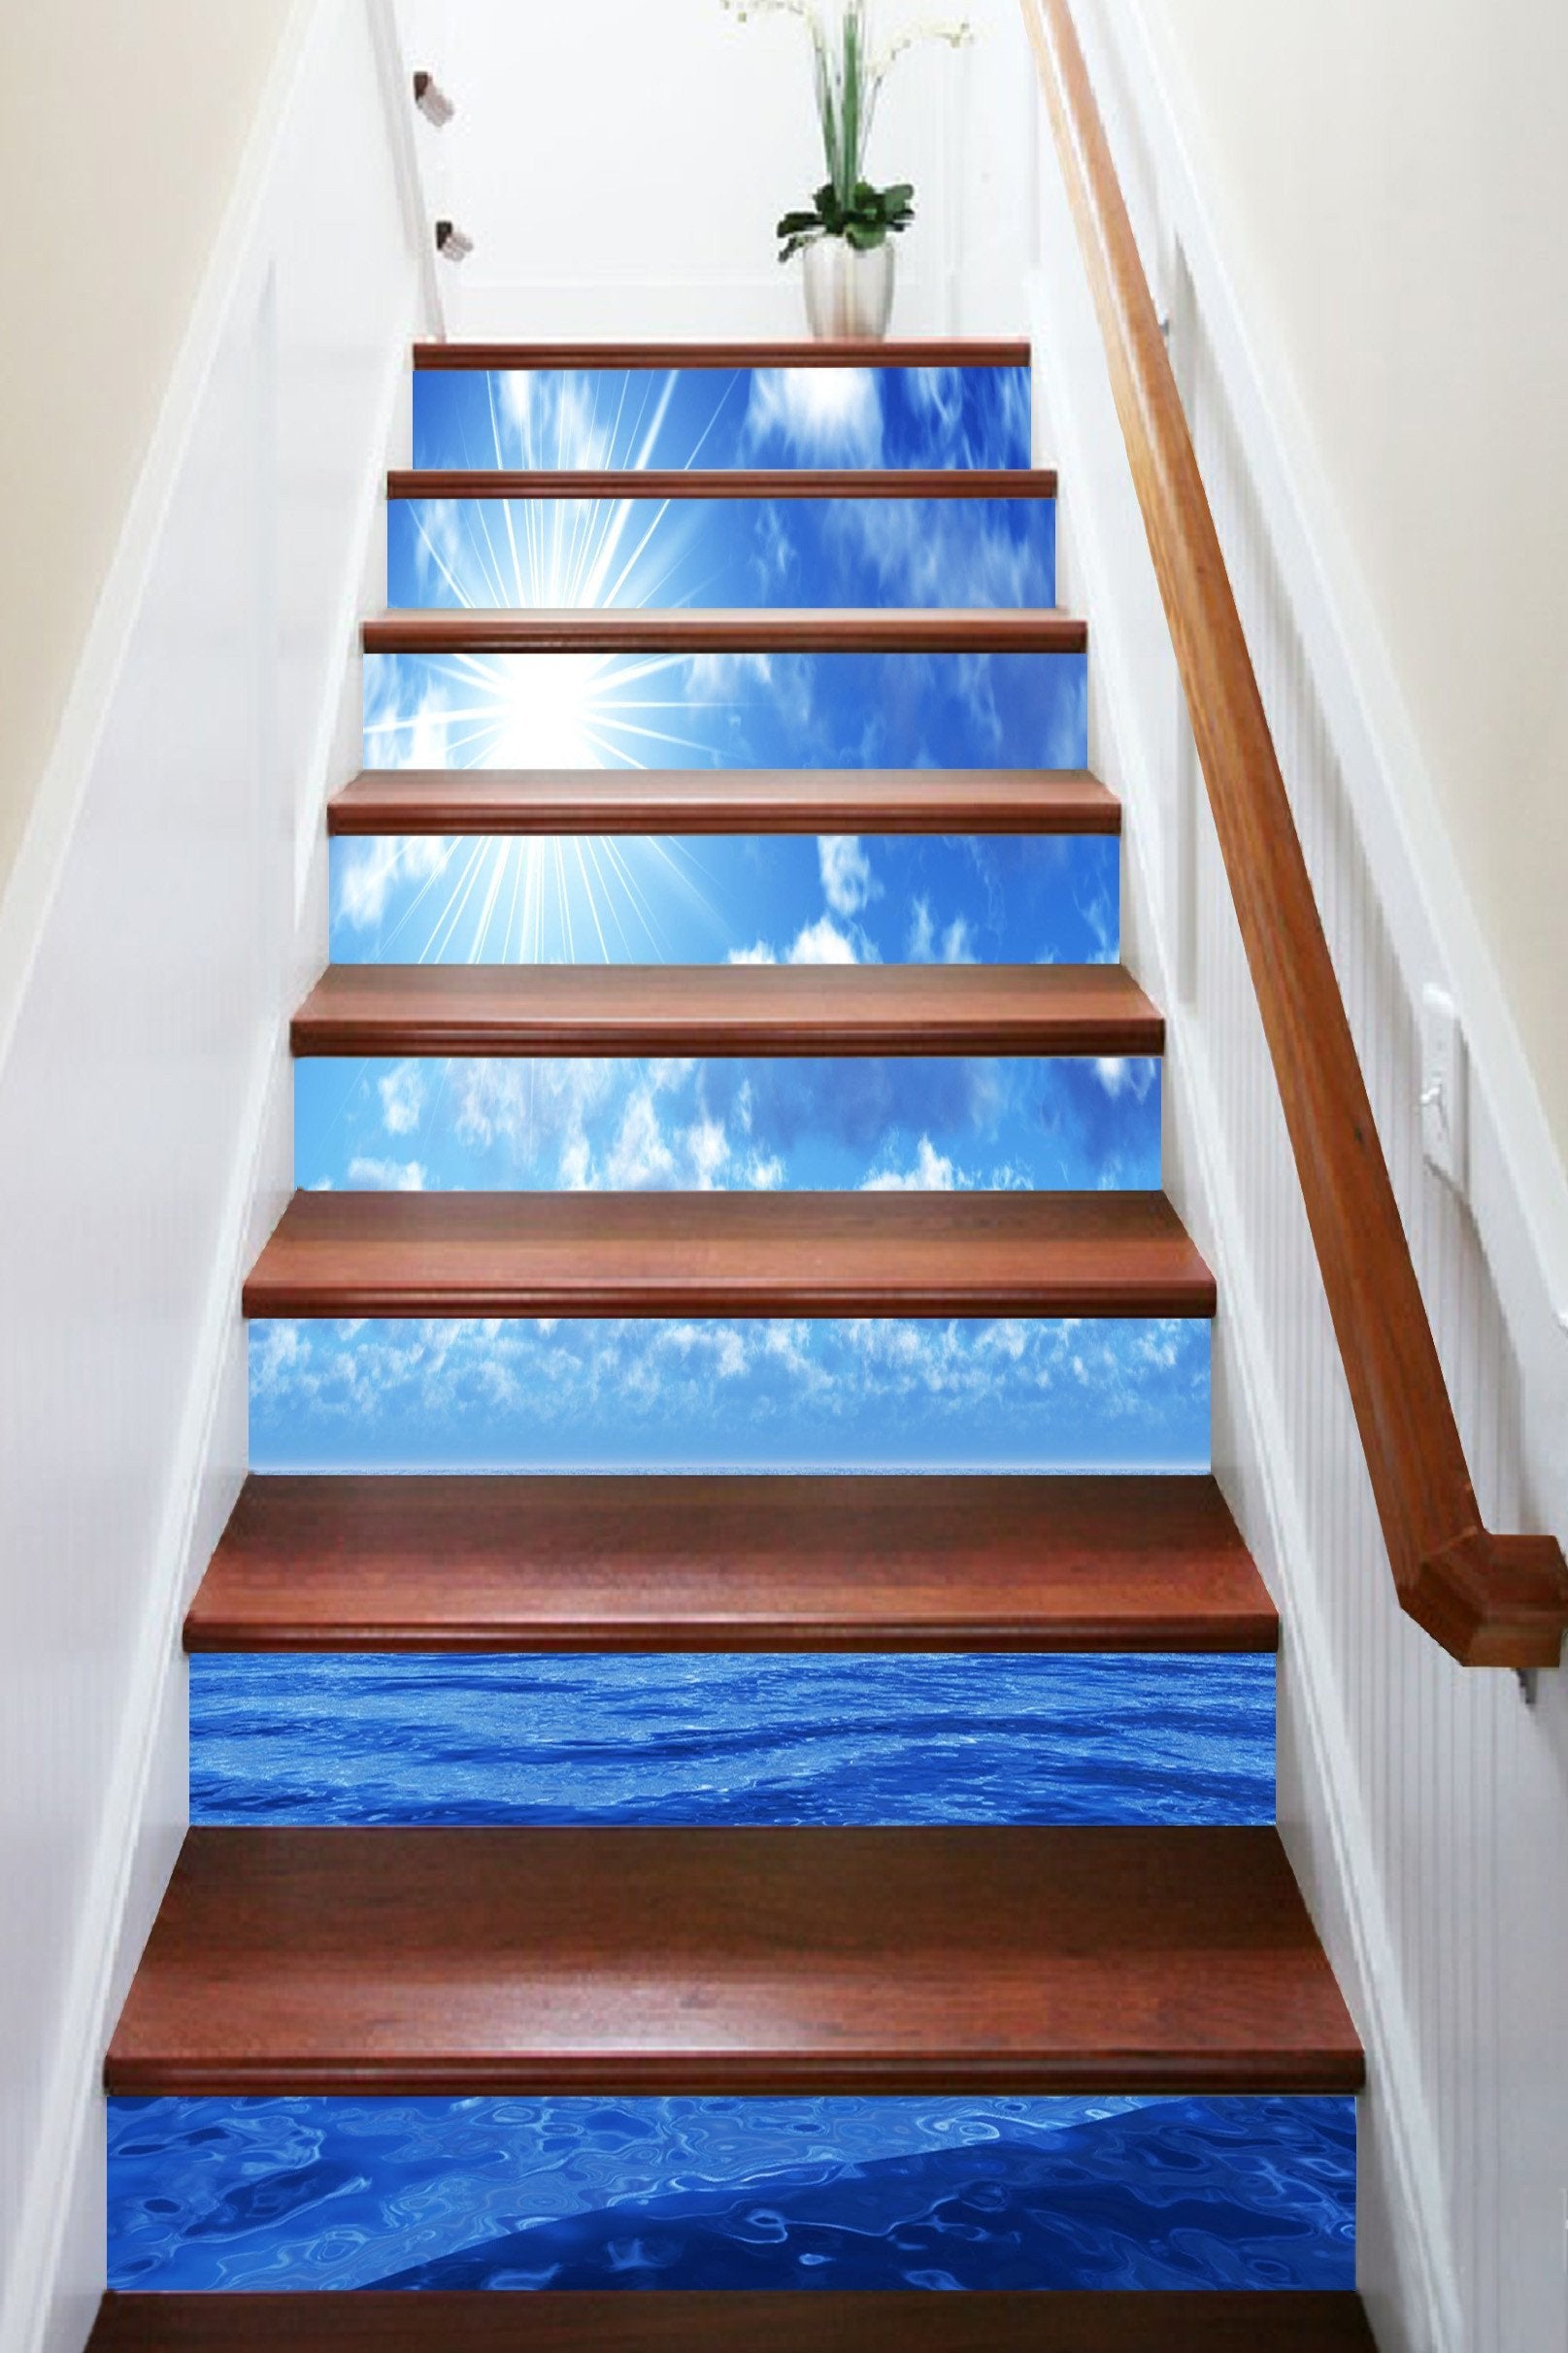 3D Sunny Blue Sea 1318 Stair Risers Wallpaper AJ Wallpaper 